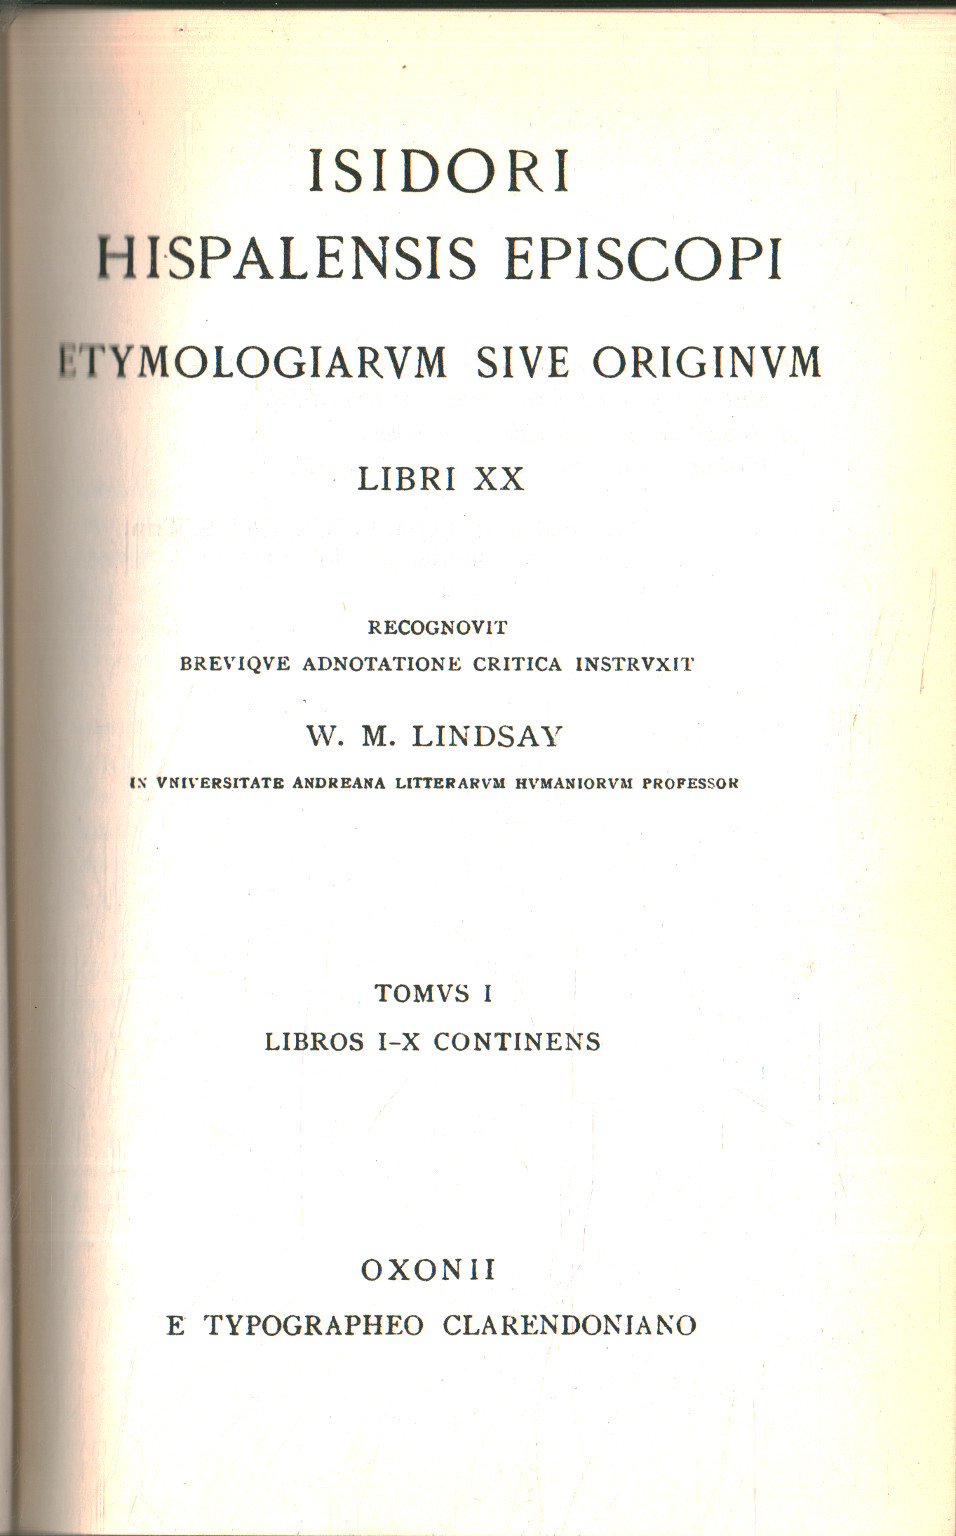 Etymologiarum sive originum. Tome I, Isidori Hispalensis Episcopi